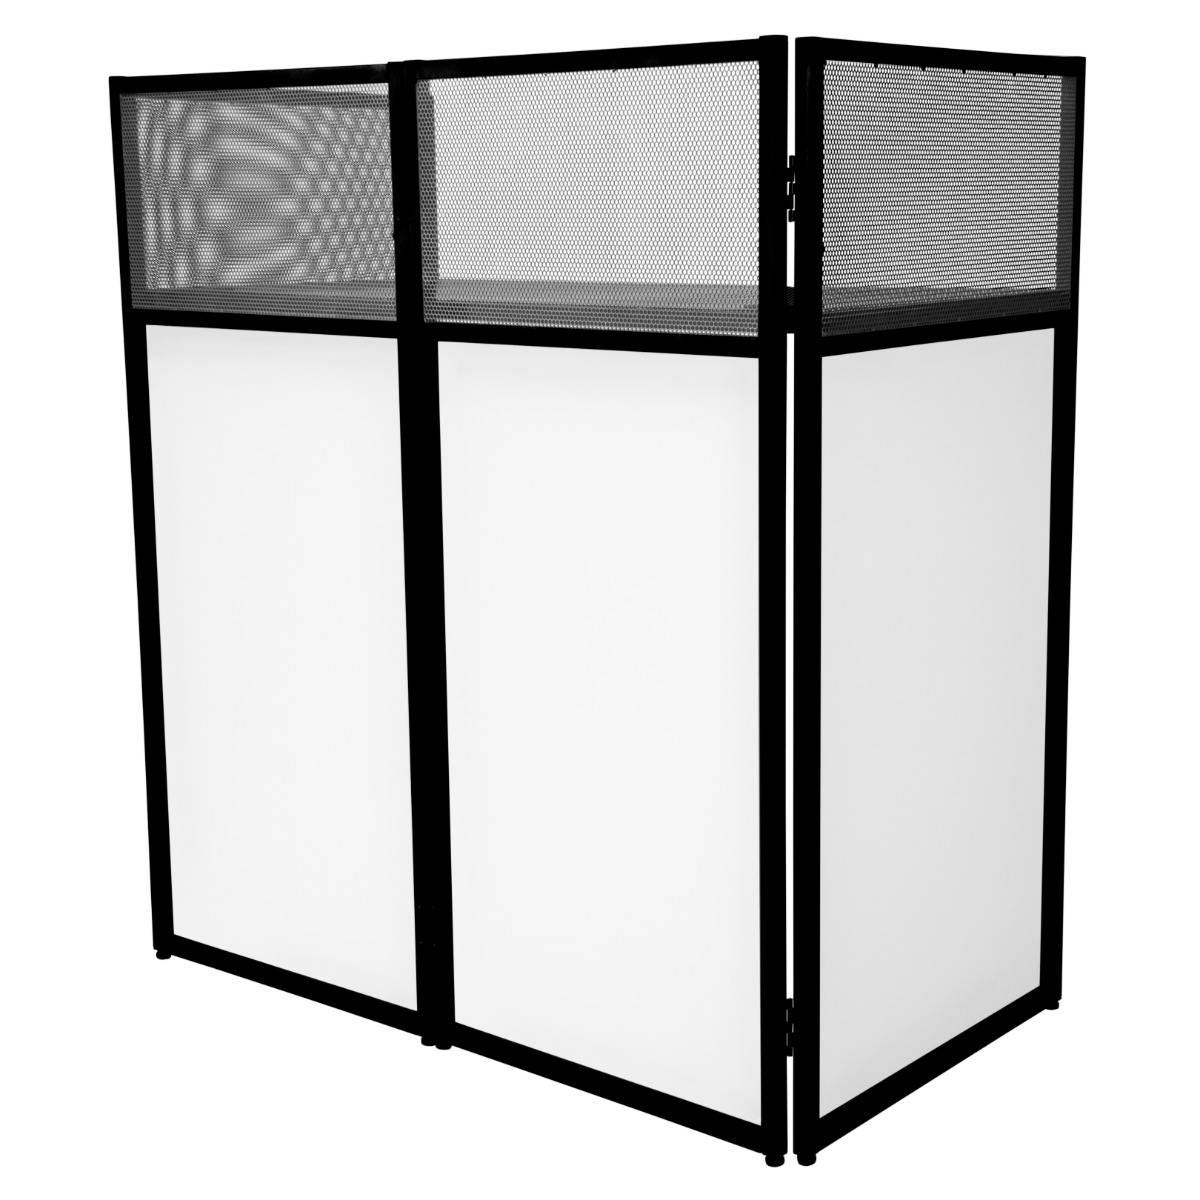 Façade Portable en Métal pour Stand DJ Disc Jockey DJ Booth 114 x 105 x 57  cm - [1 Tissu Noir & 2 Tissus Blancs INCLUS]